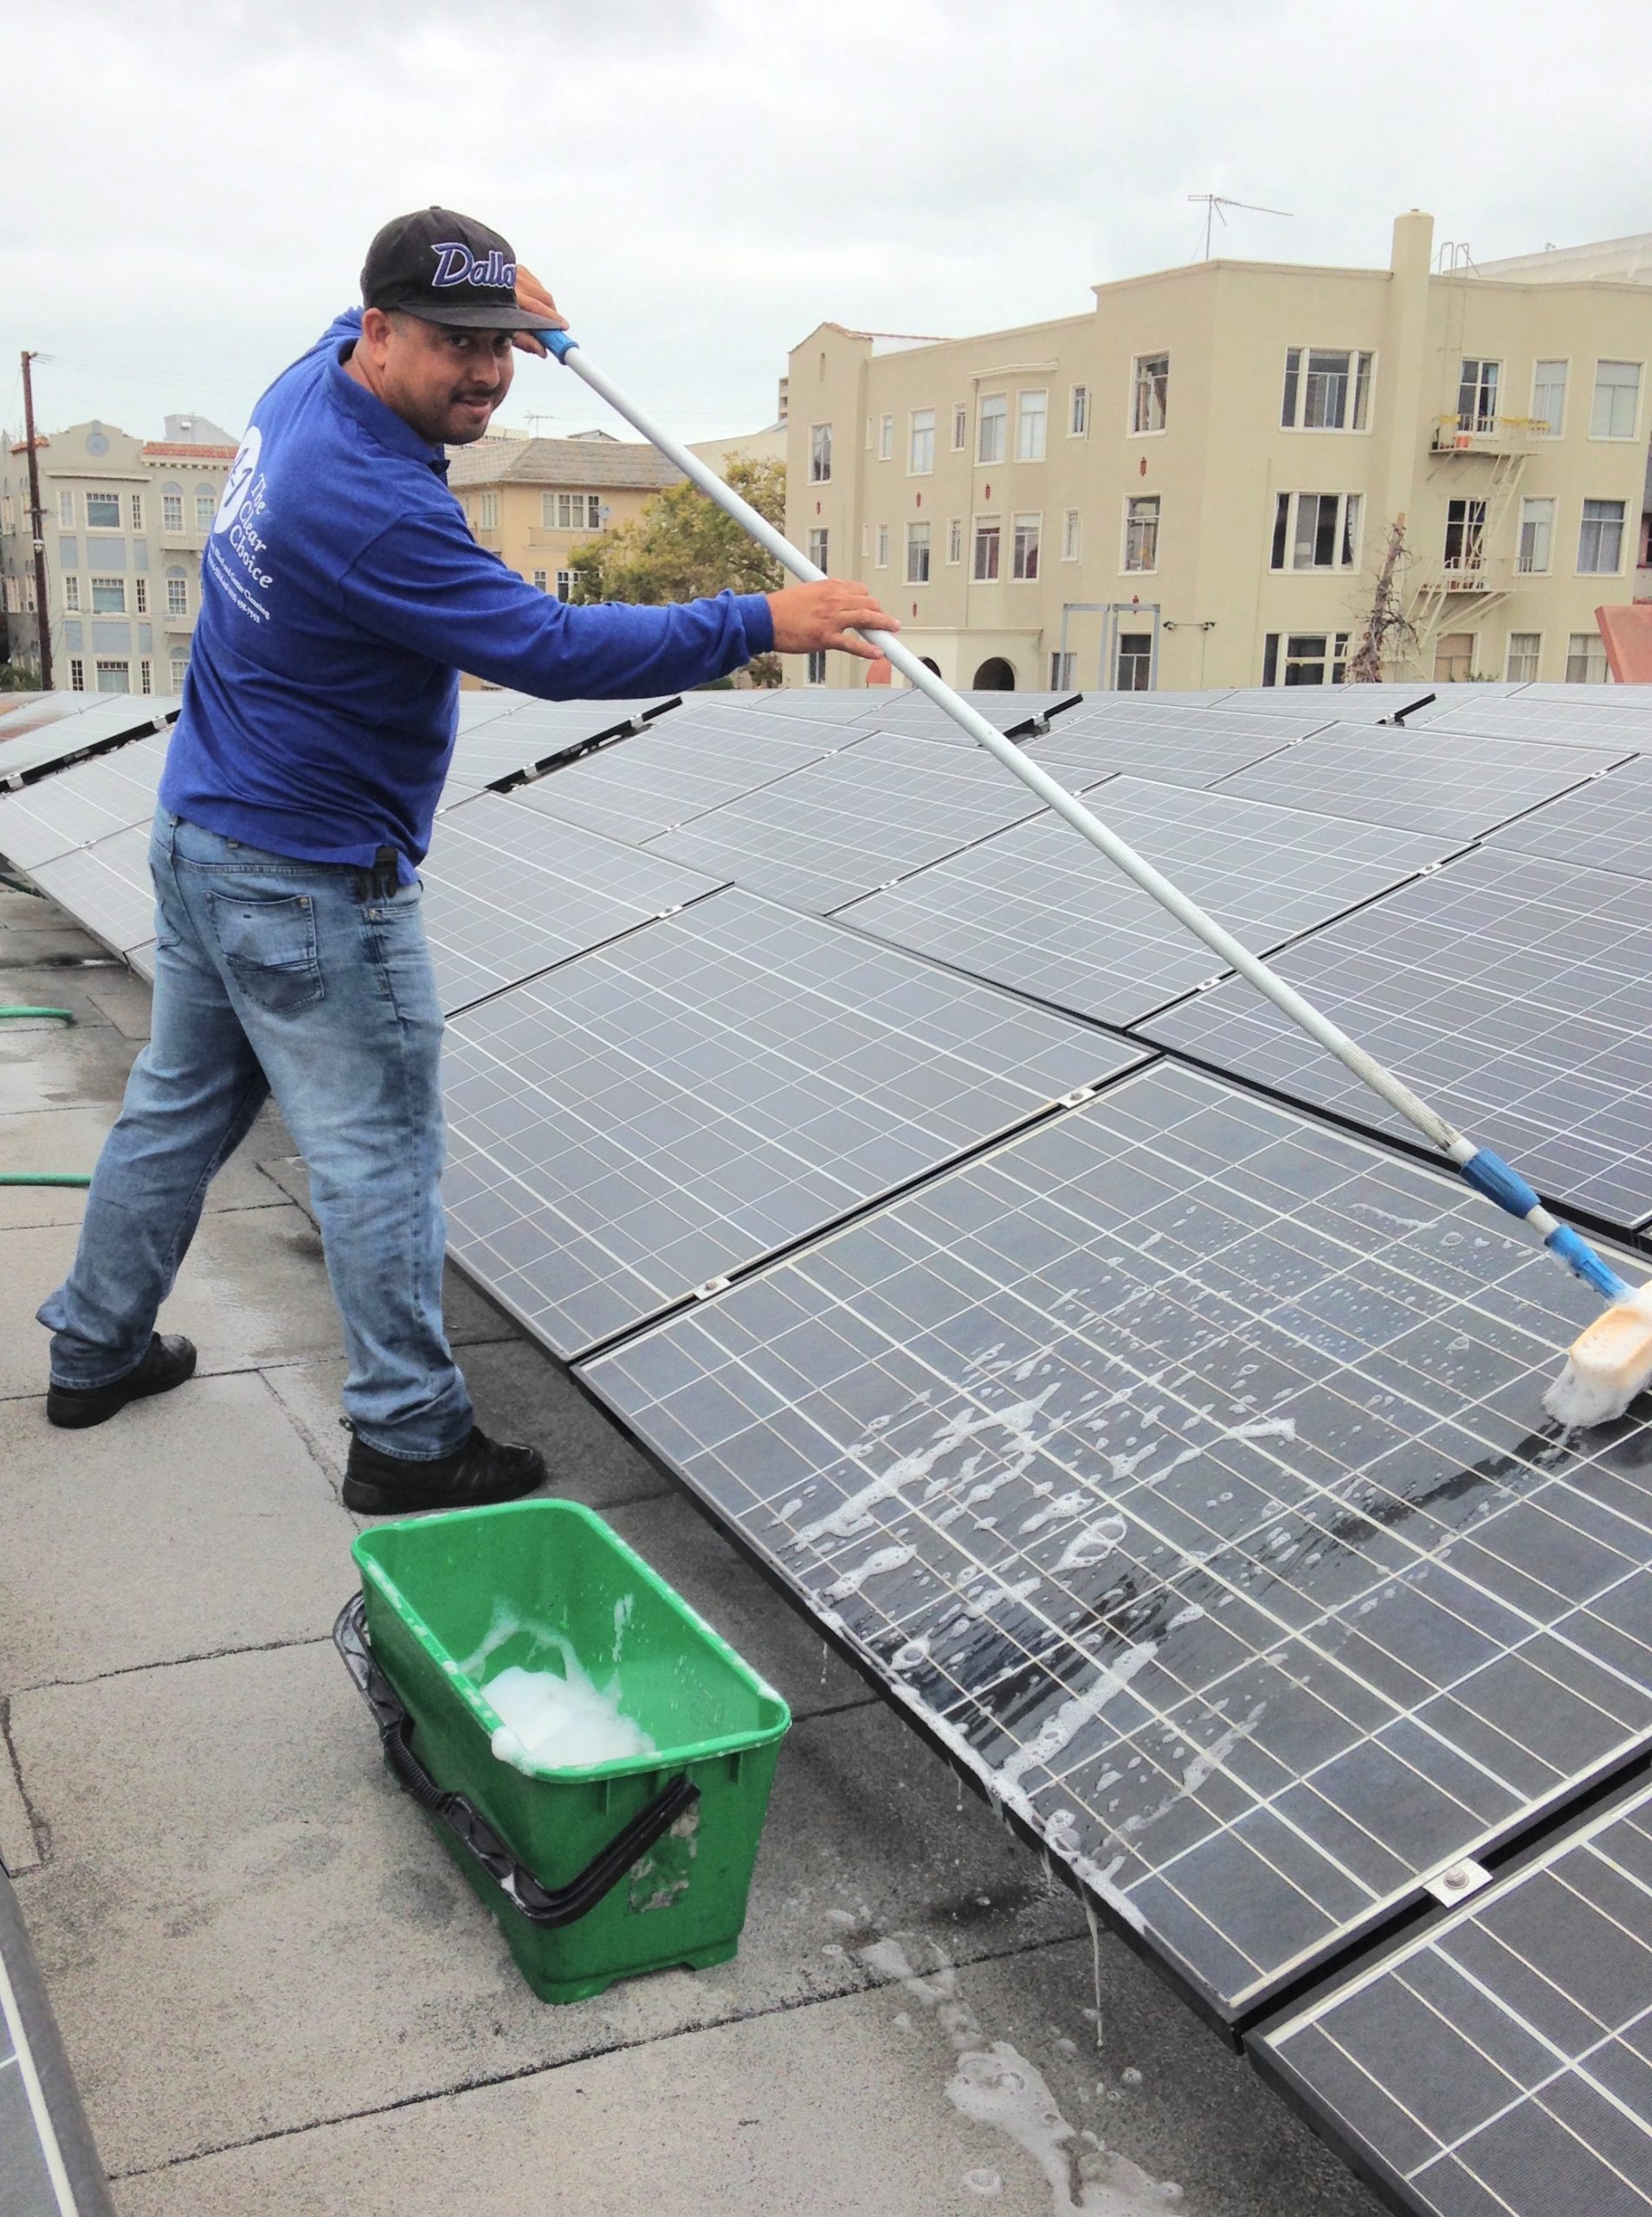 Improve Efficiency, Clean Your Solar Panels